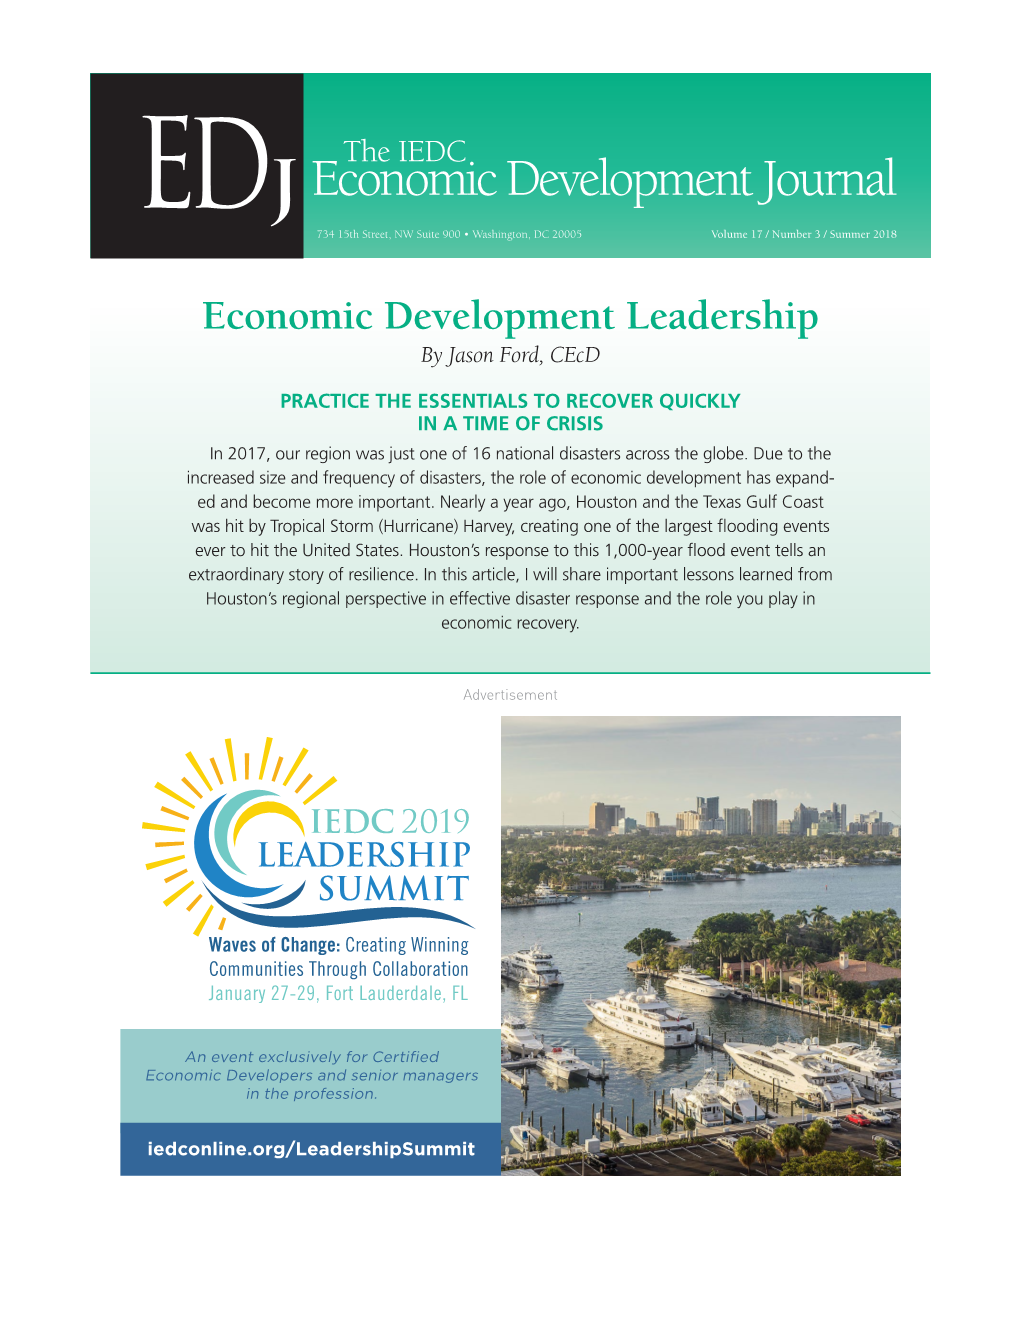 Economic Development Leadership by Jason Ford, Cecd